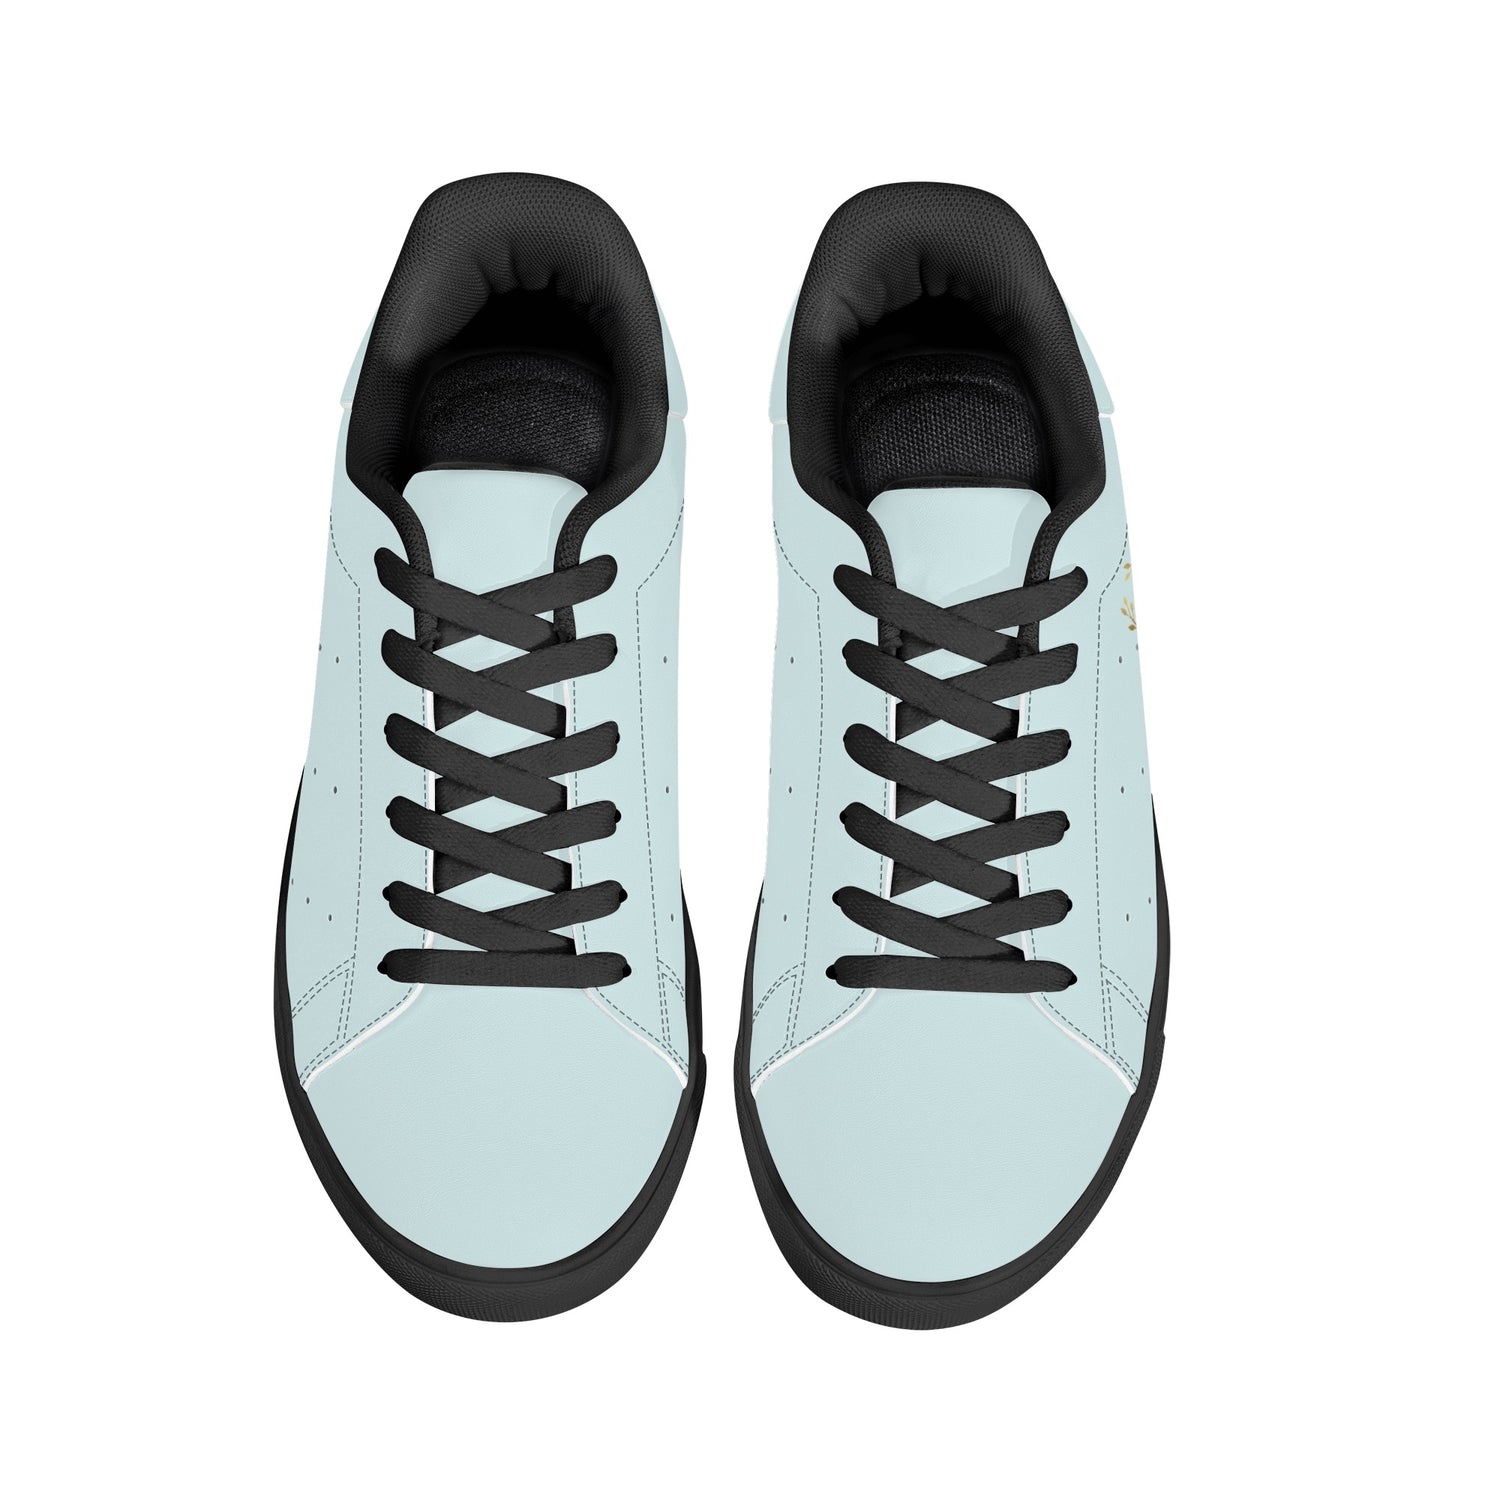 Maison Koly Bafula Bay Low Top Leather Sneakers- Sky blue - maisonkoly.com